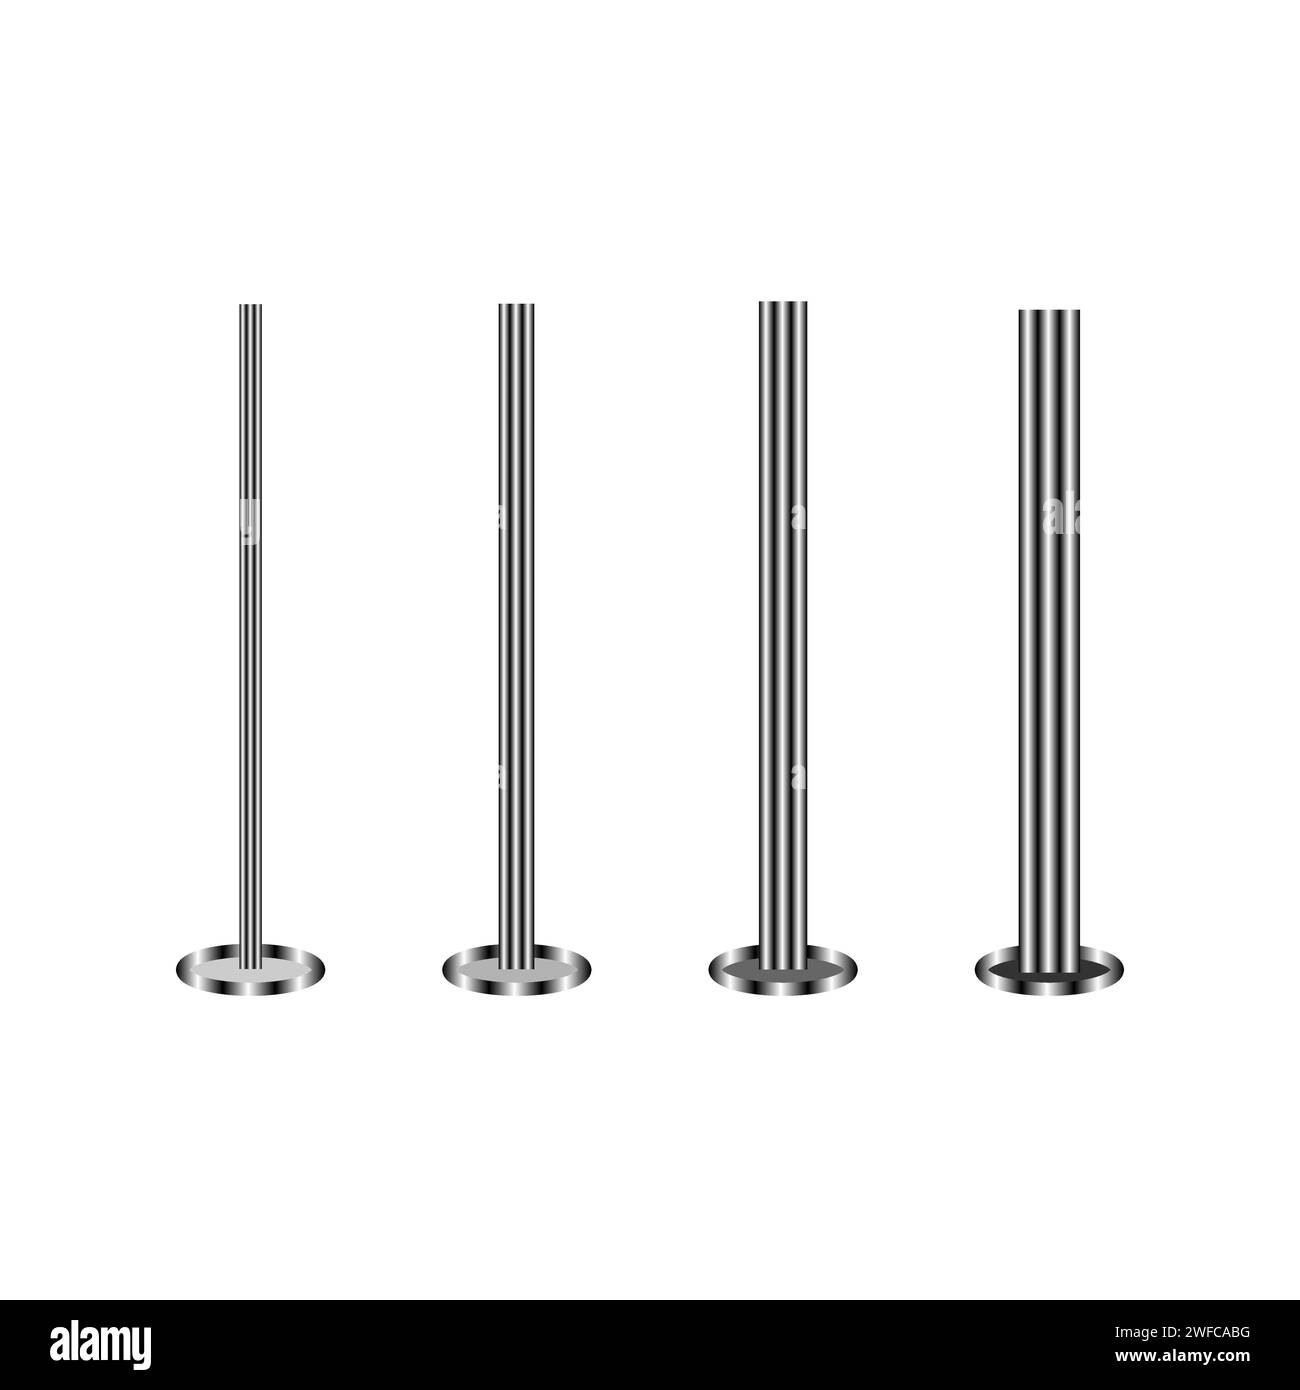 steel posts for banner design. Vector illustration. Stock image. EPS 10. Stock Vector